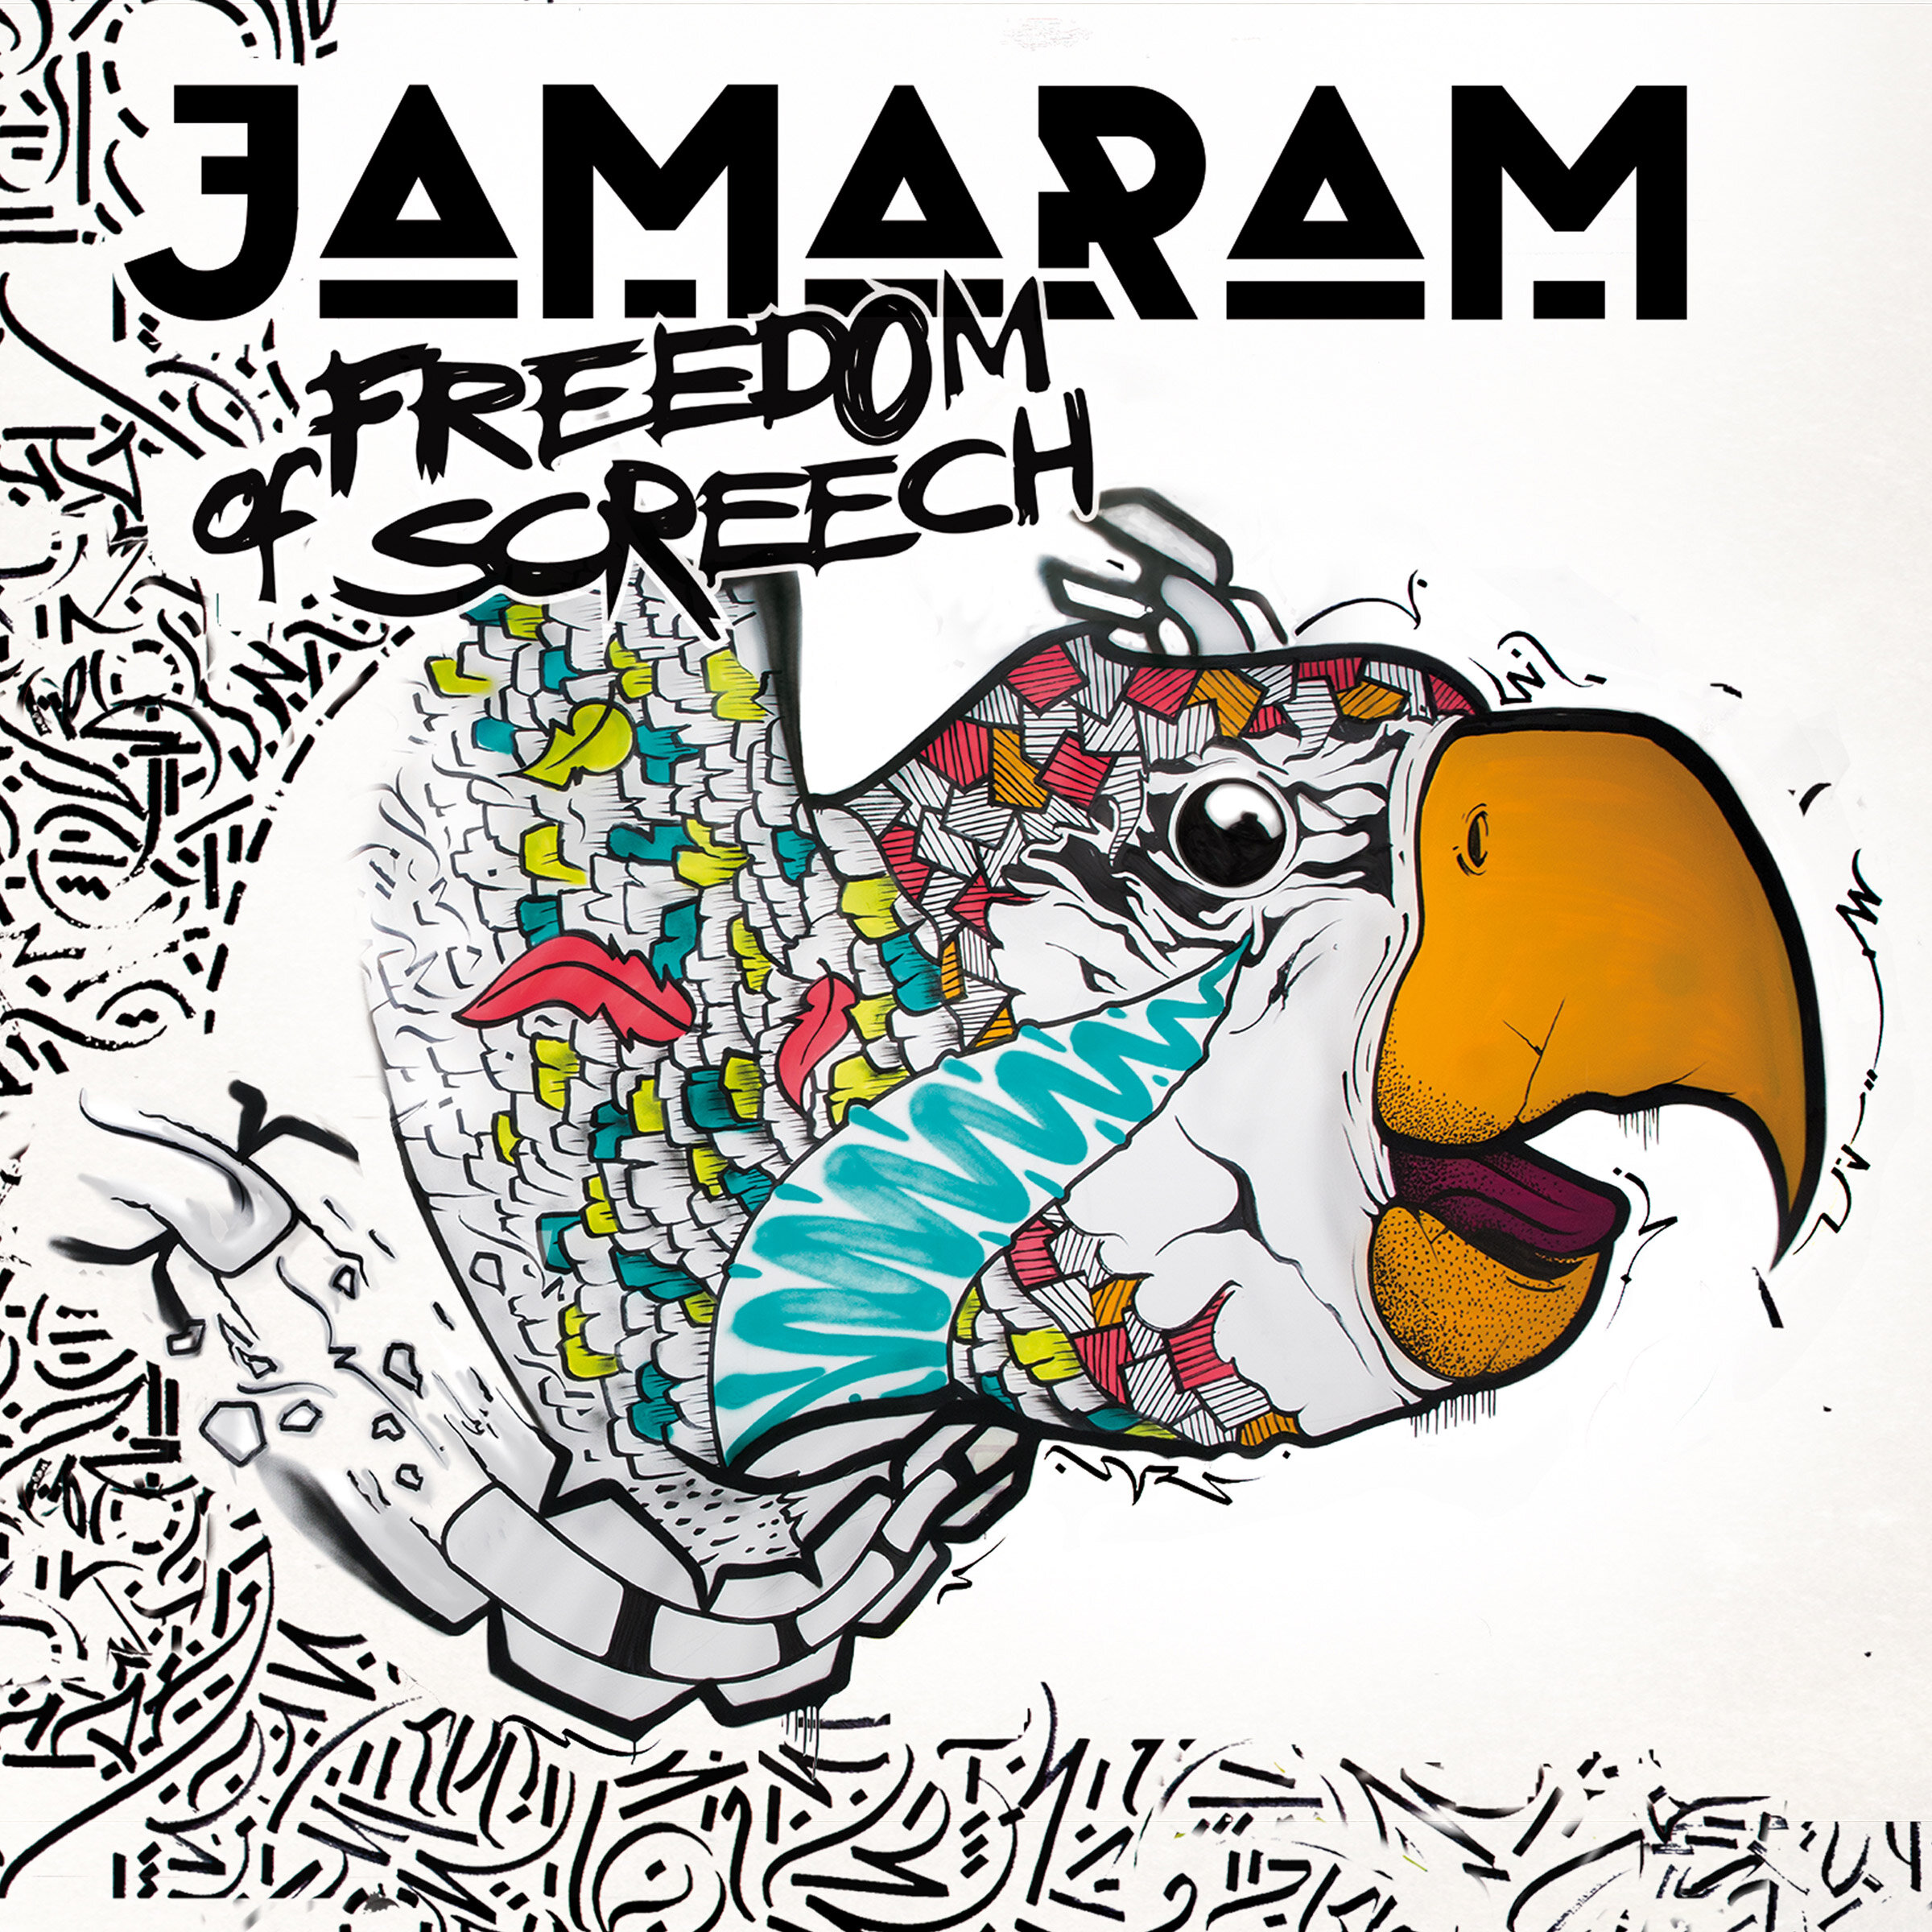 2017 - JAMARAM - Freedom Of Screech (album)